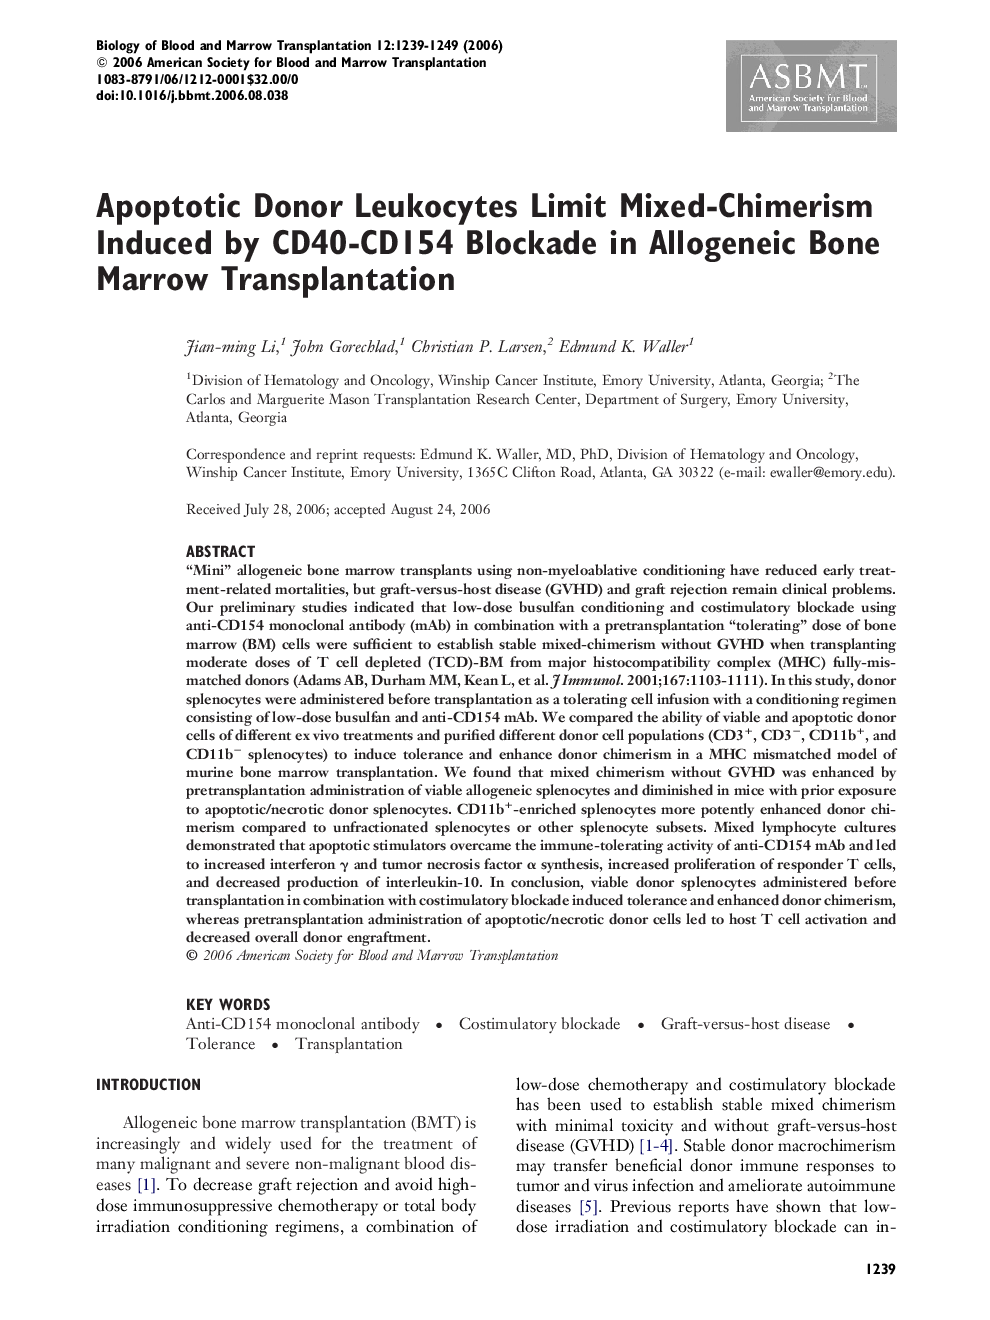 Apoptotic Donor Leukocytes Limit Mixed-Chimerism Induced by CD40-CD154 Blockade in Allogeneic Bone Marrow Transplantation